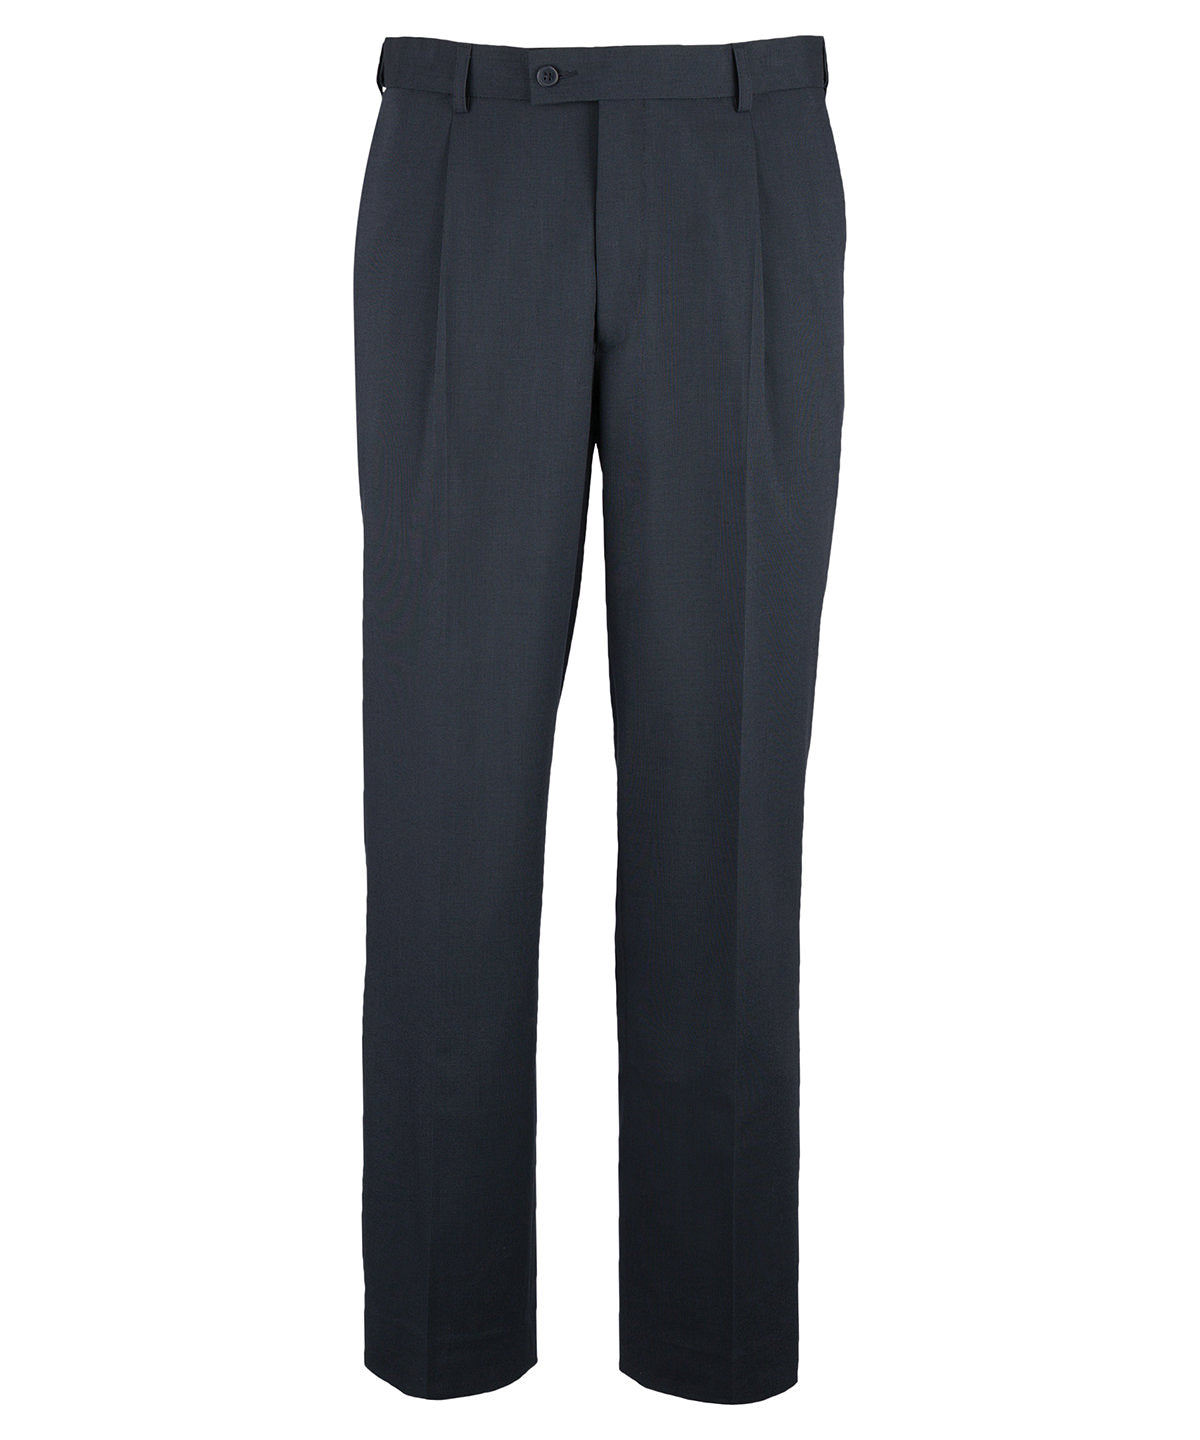 Men's Business trousers (single pleat) PR520 - Custom Uniforms